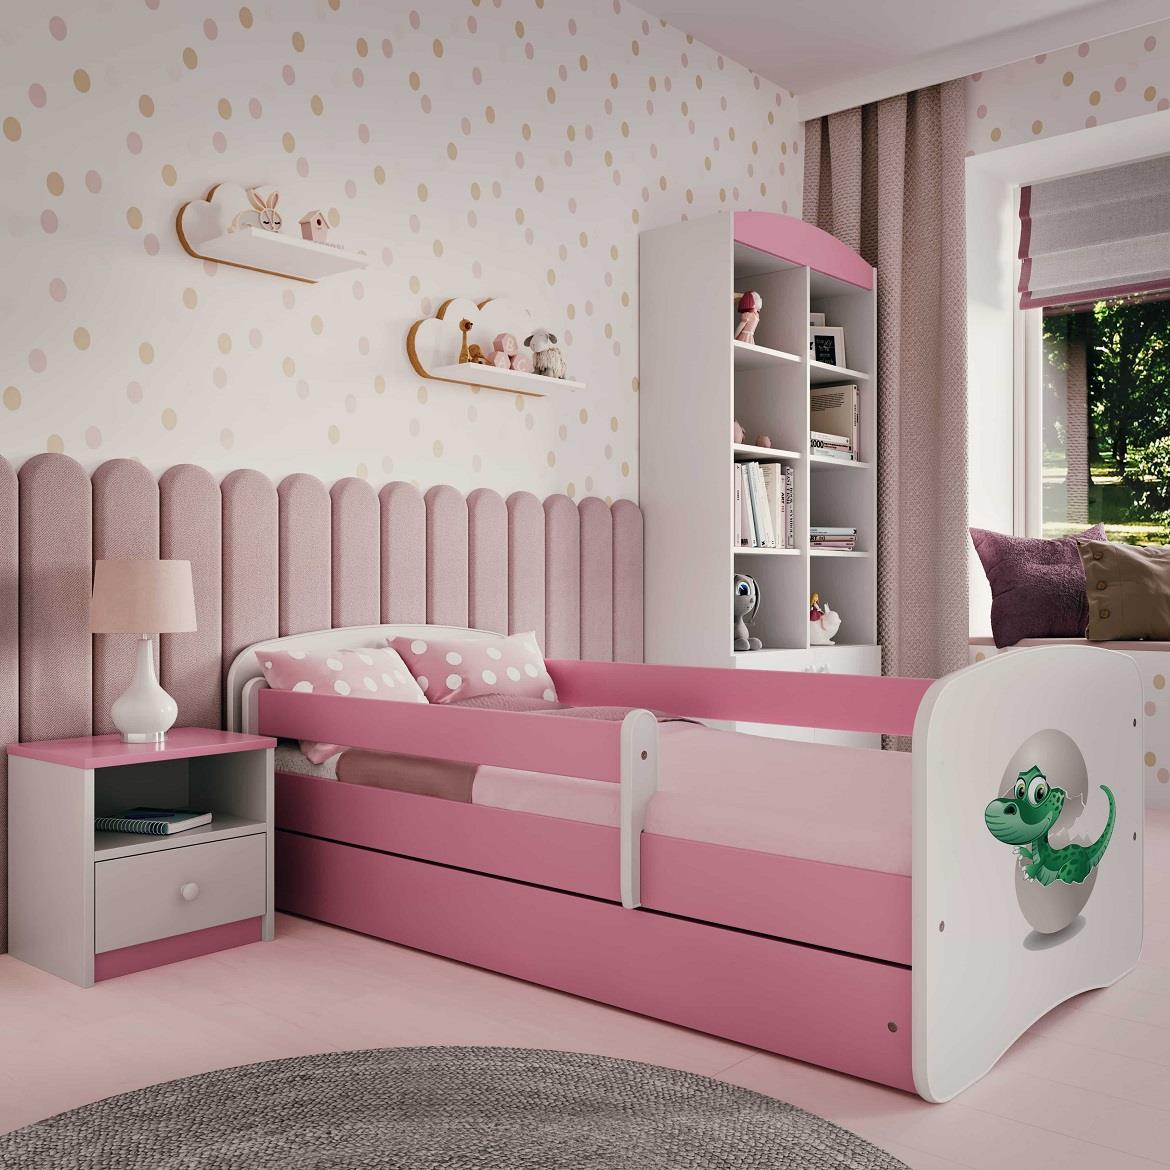 Babydreams krevet+podnica+dušek 80x144x61 cm beli/roze/print dinosaurus